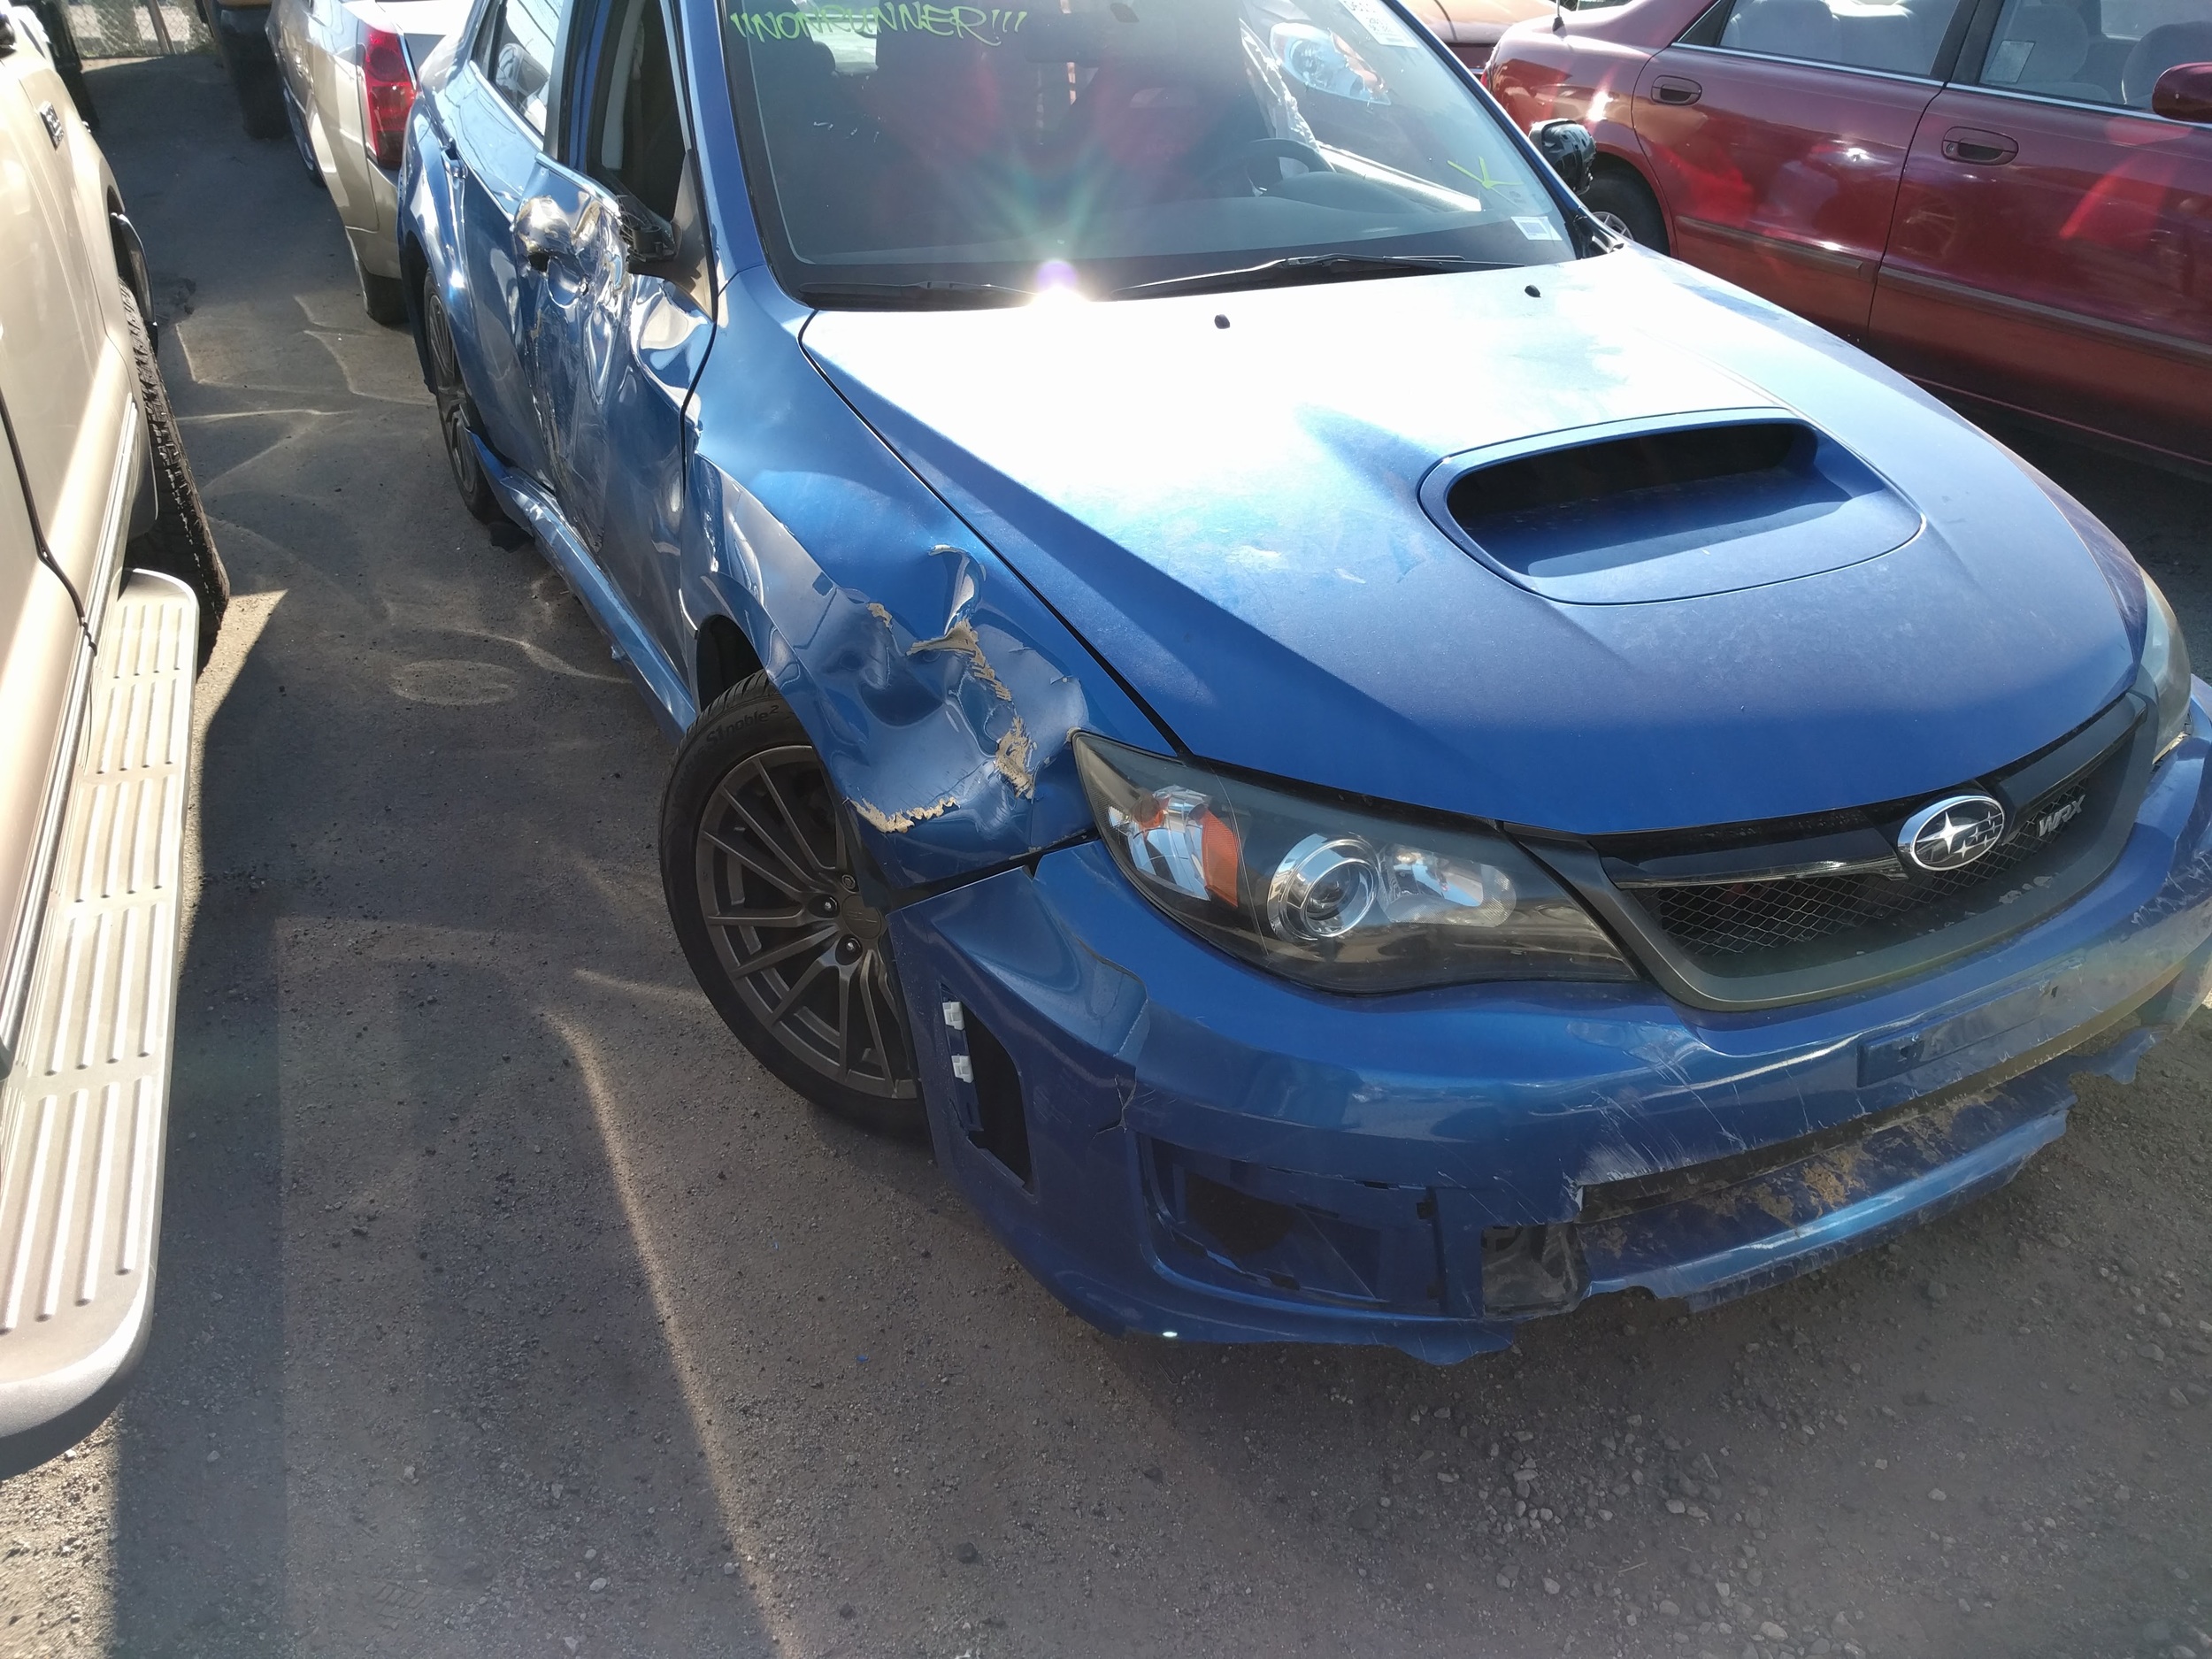 2013 Subaru WRX (non-running, multiple collision damage)